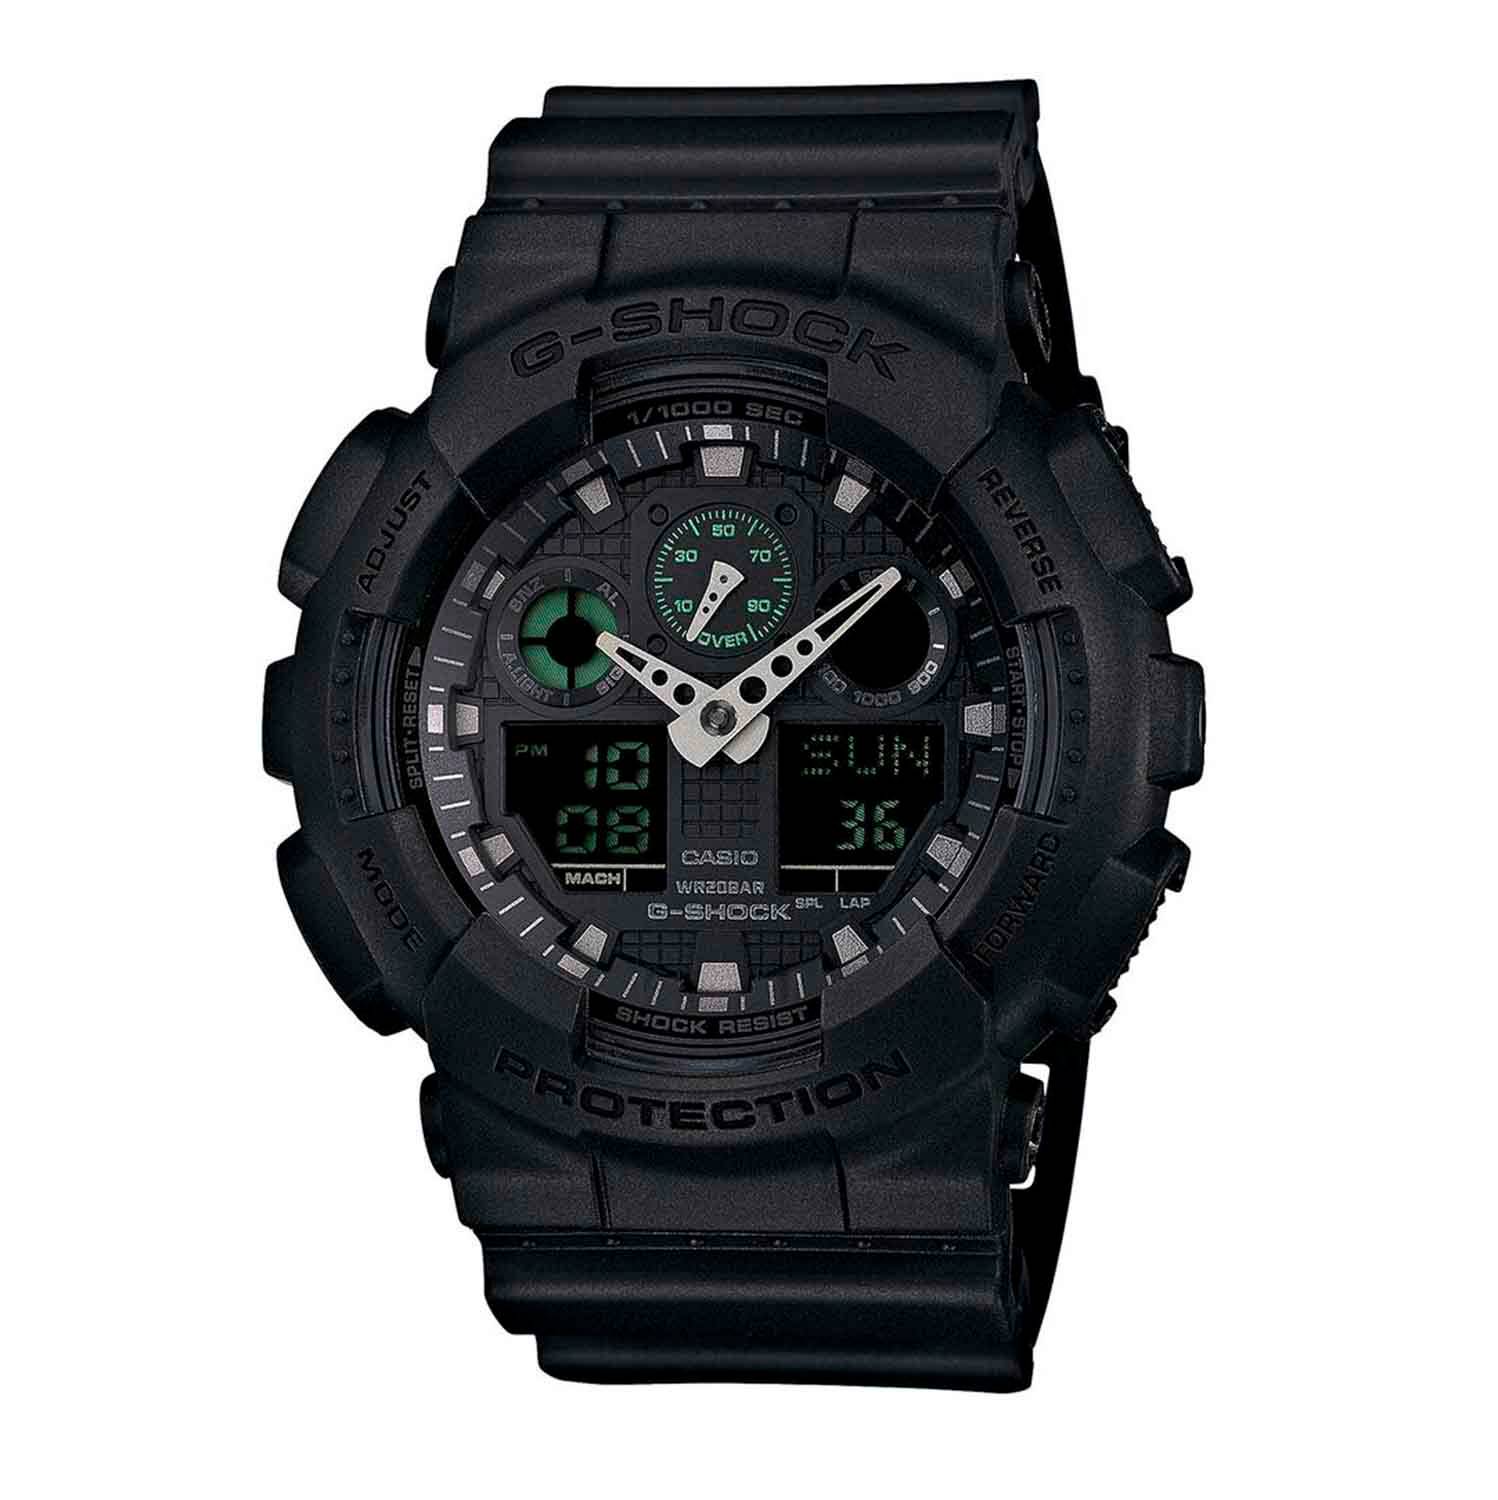 Casio G-Shock Analog Digital Watch